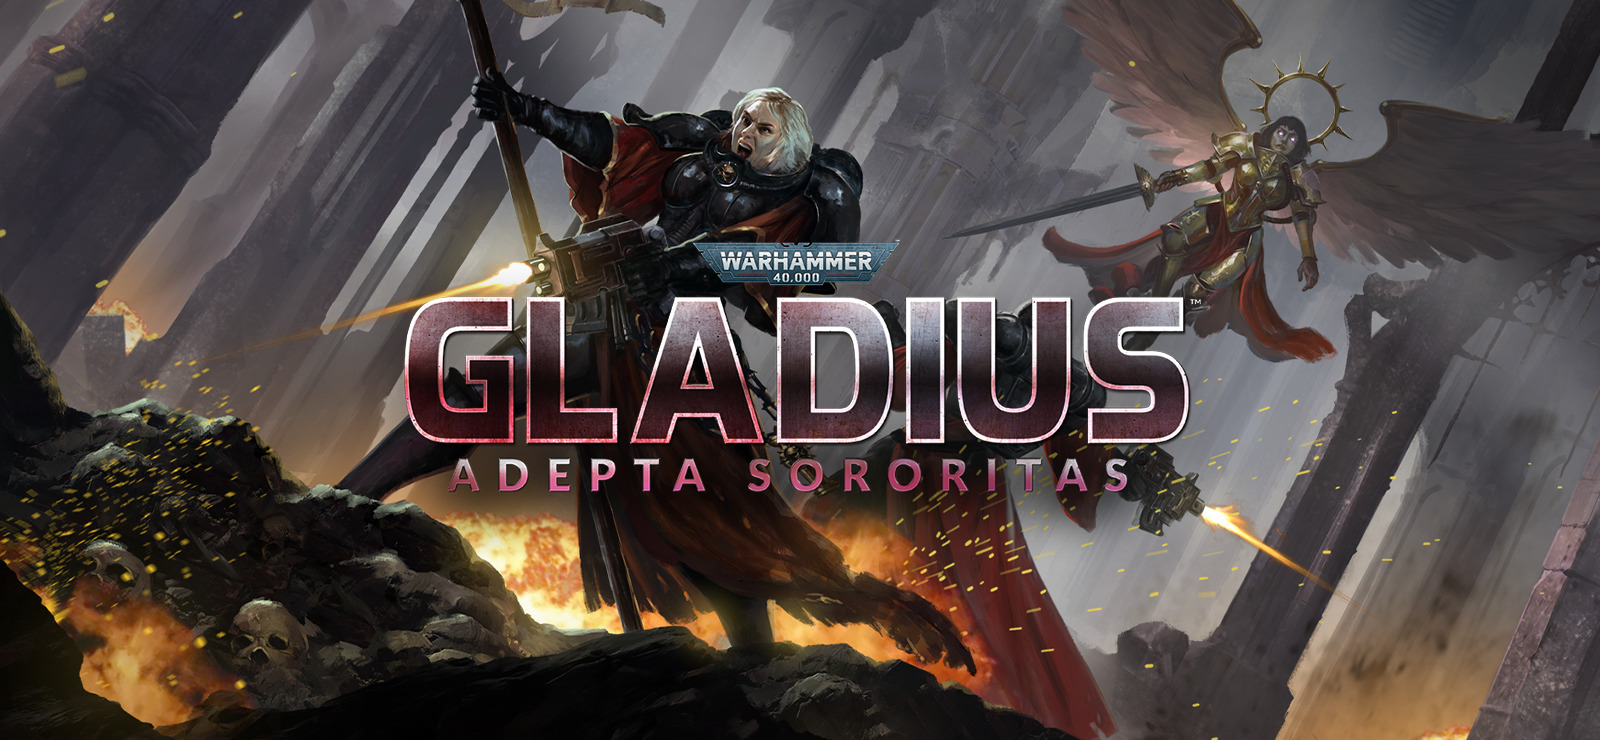 Warhammer 40,000: Gladius - Adepta Sororitas Steam Key for PC and Linux -  Buy now